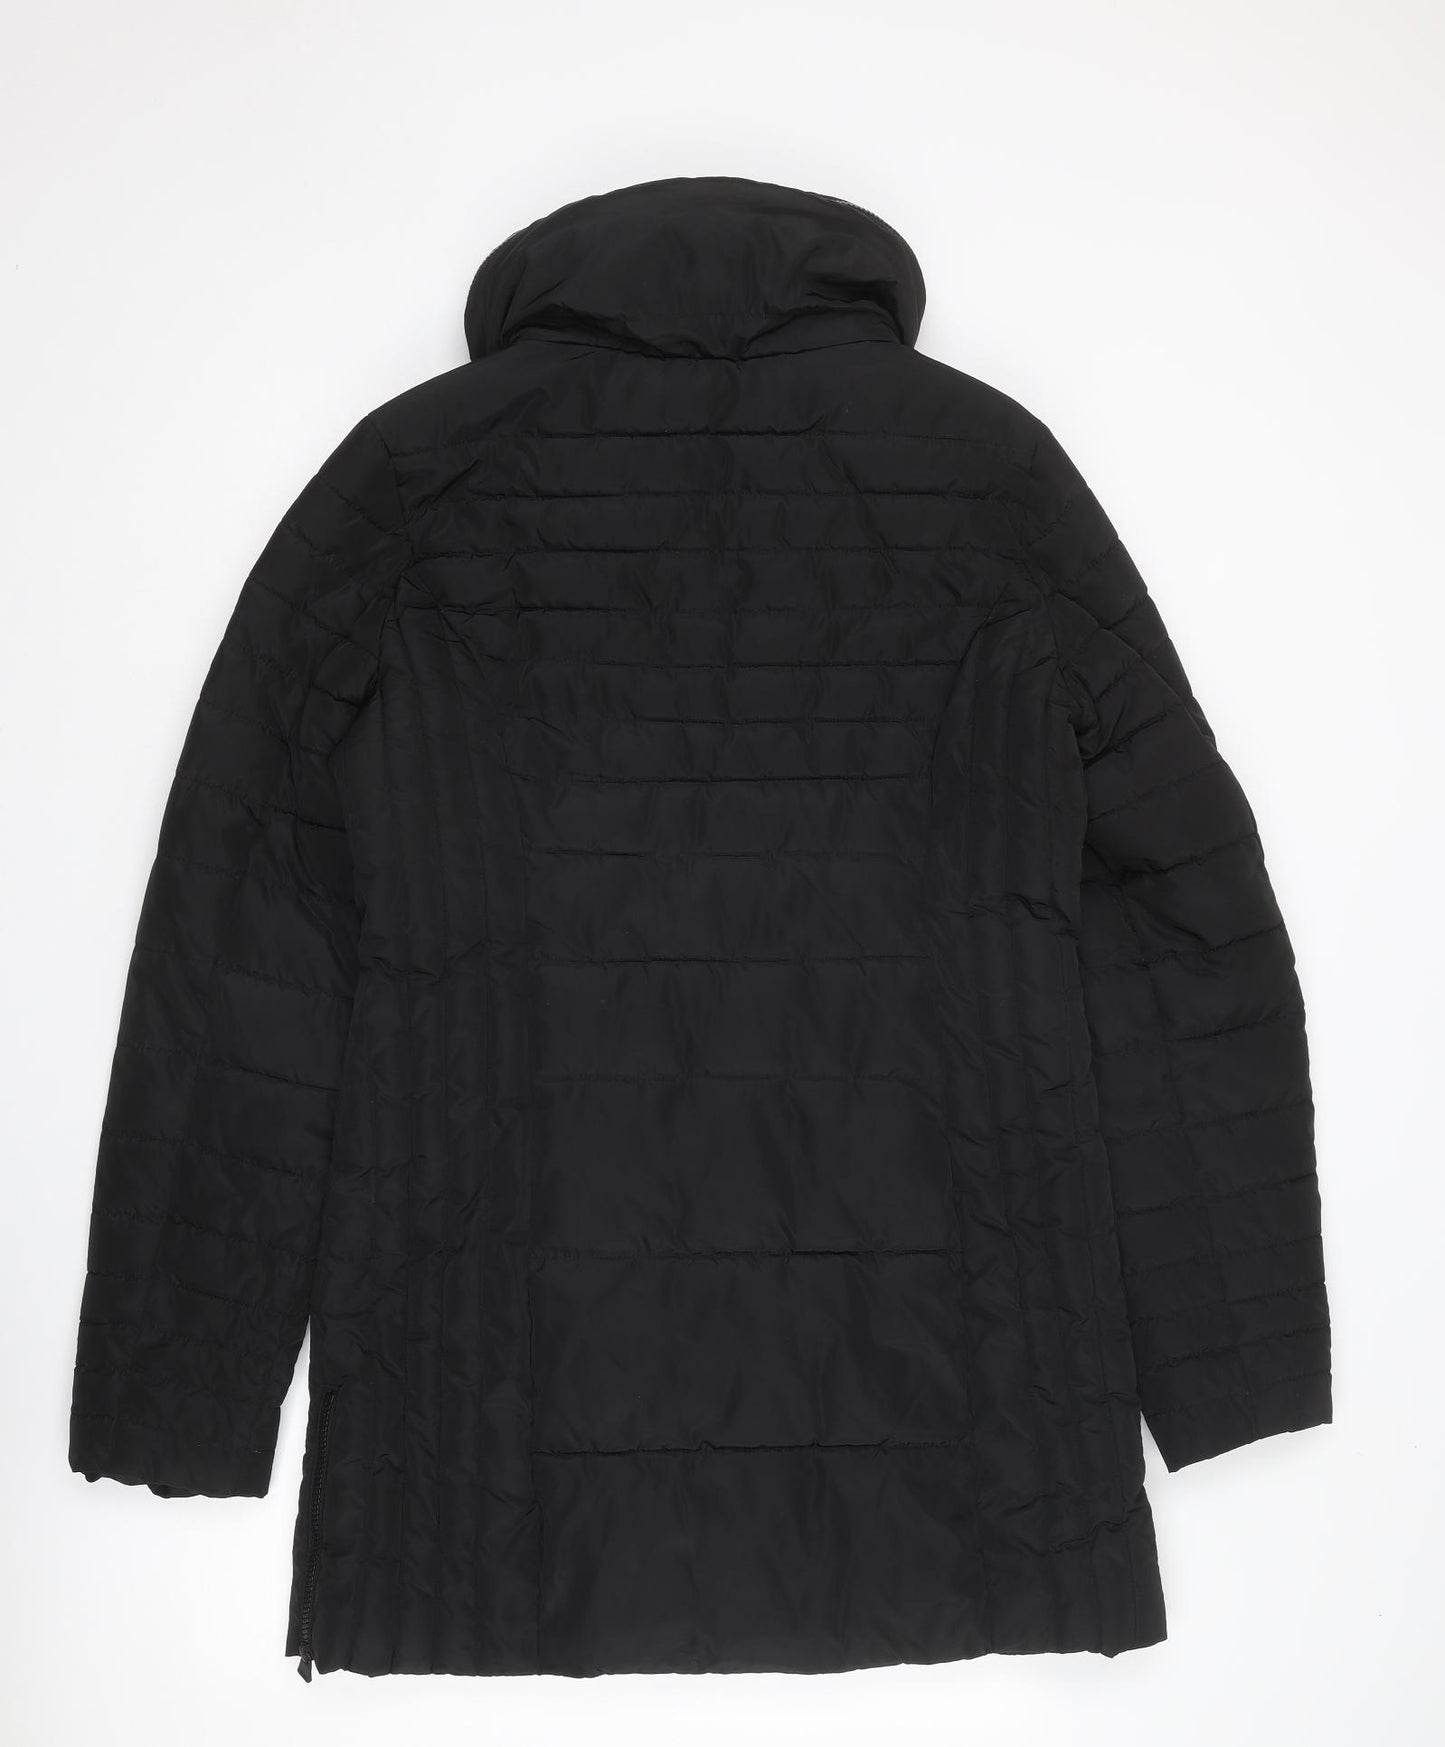 NEXT Womens Black Puffer Jacket Jacket Size 16 Zip